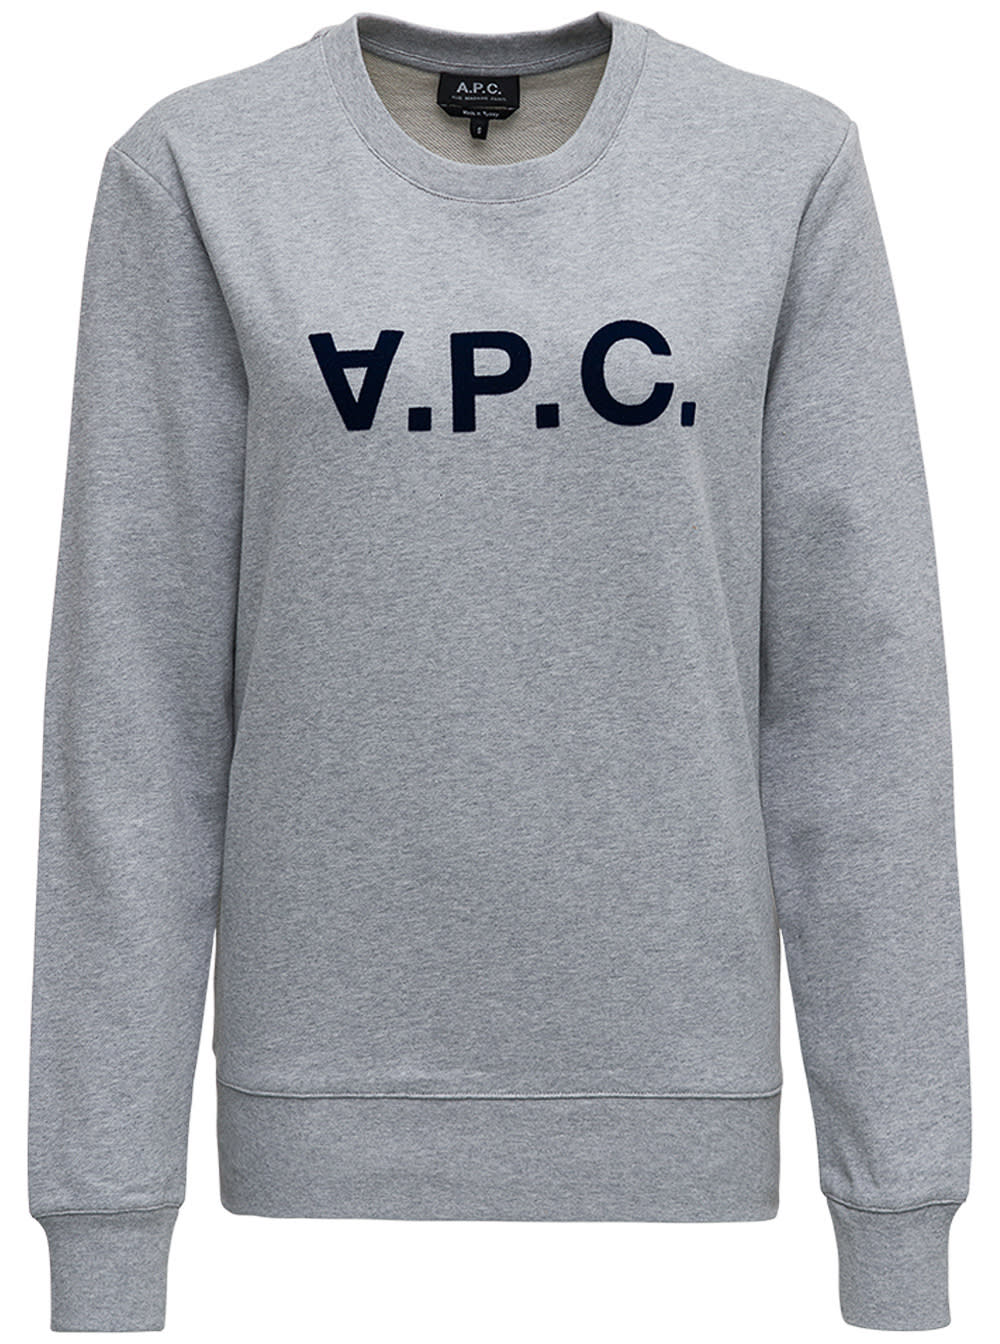 A.P.C. Grey Cotton Sweatshirt With Logo Print